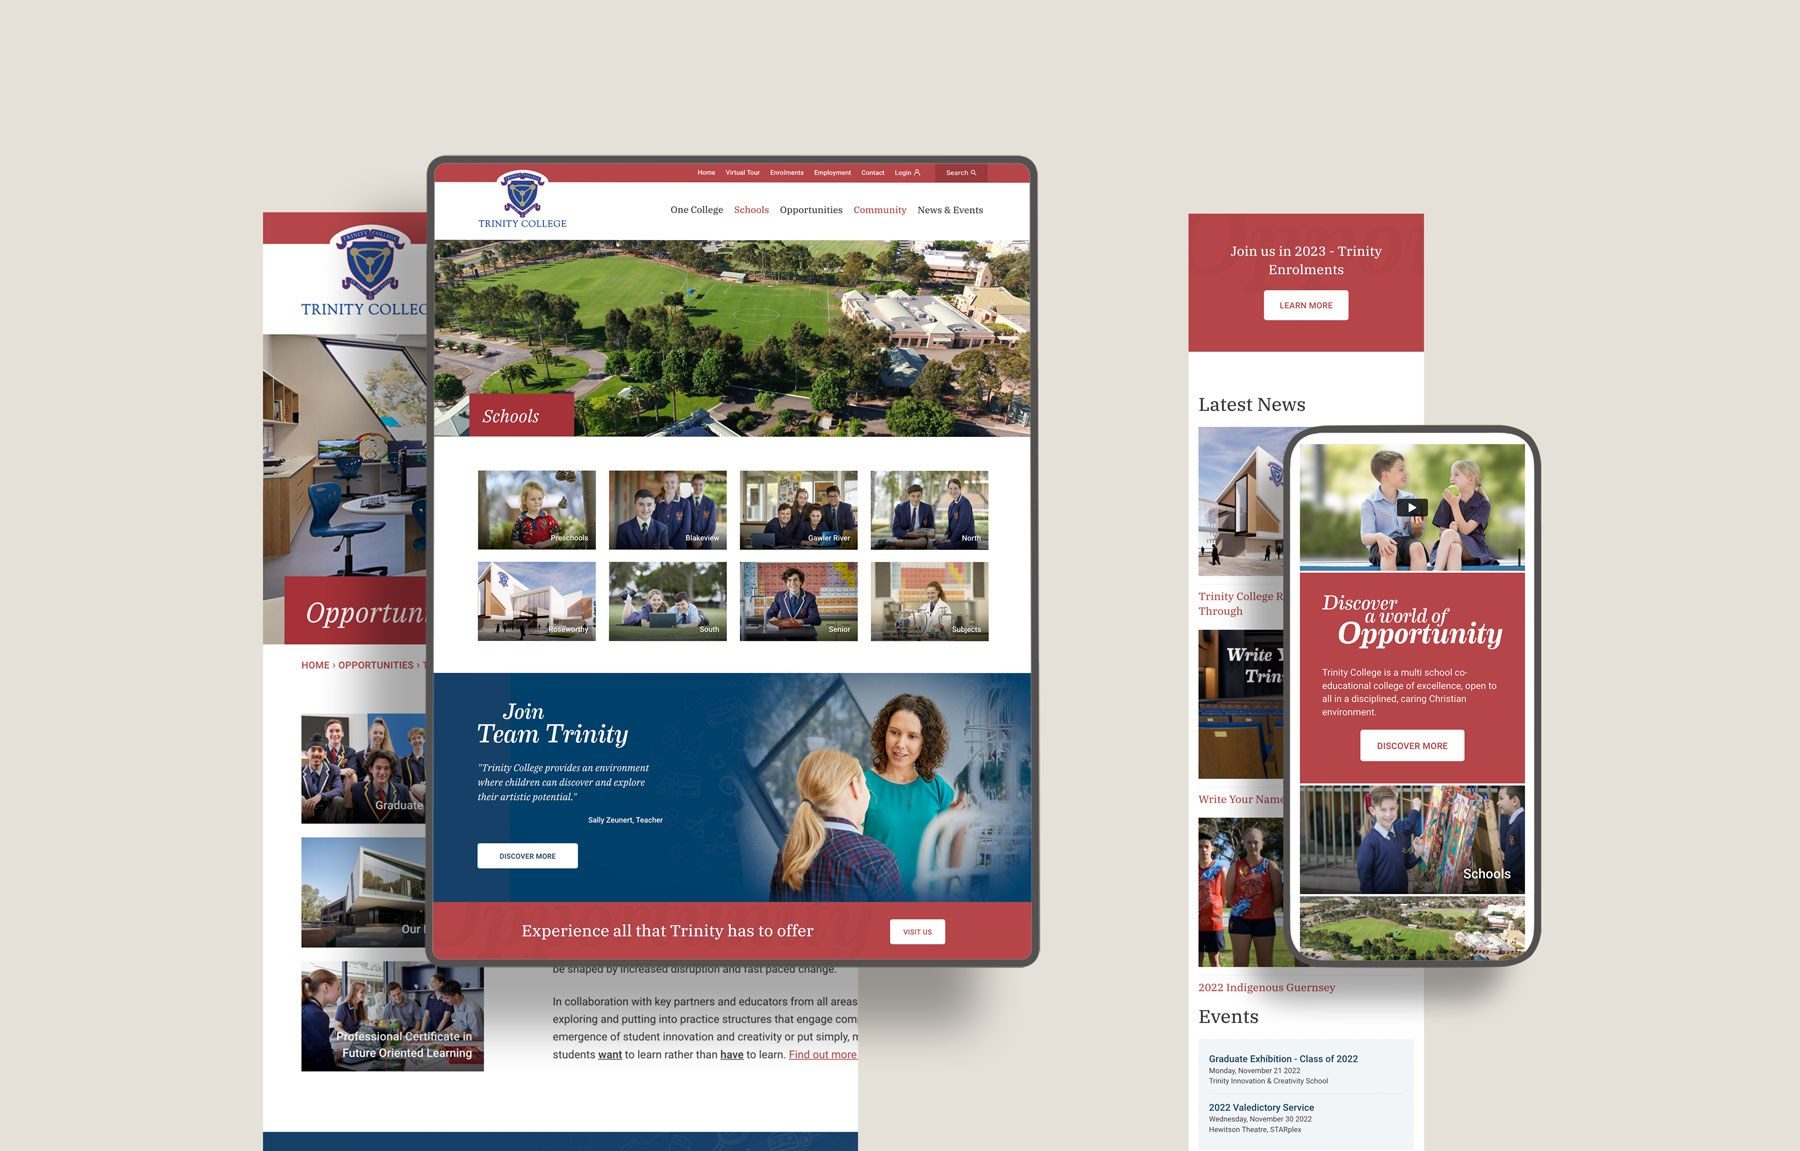 SEO adelaide website design - Trinity College school